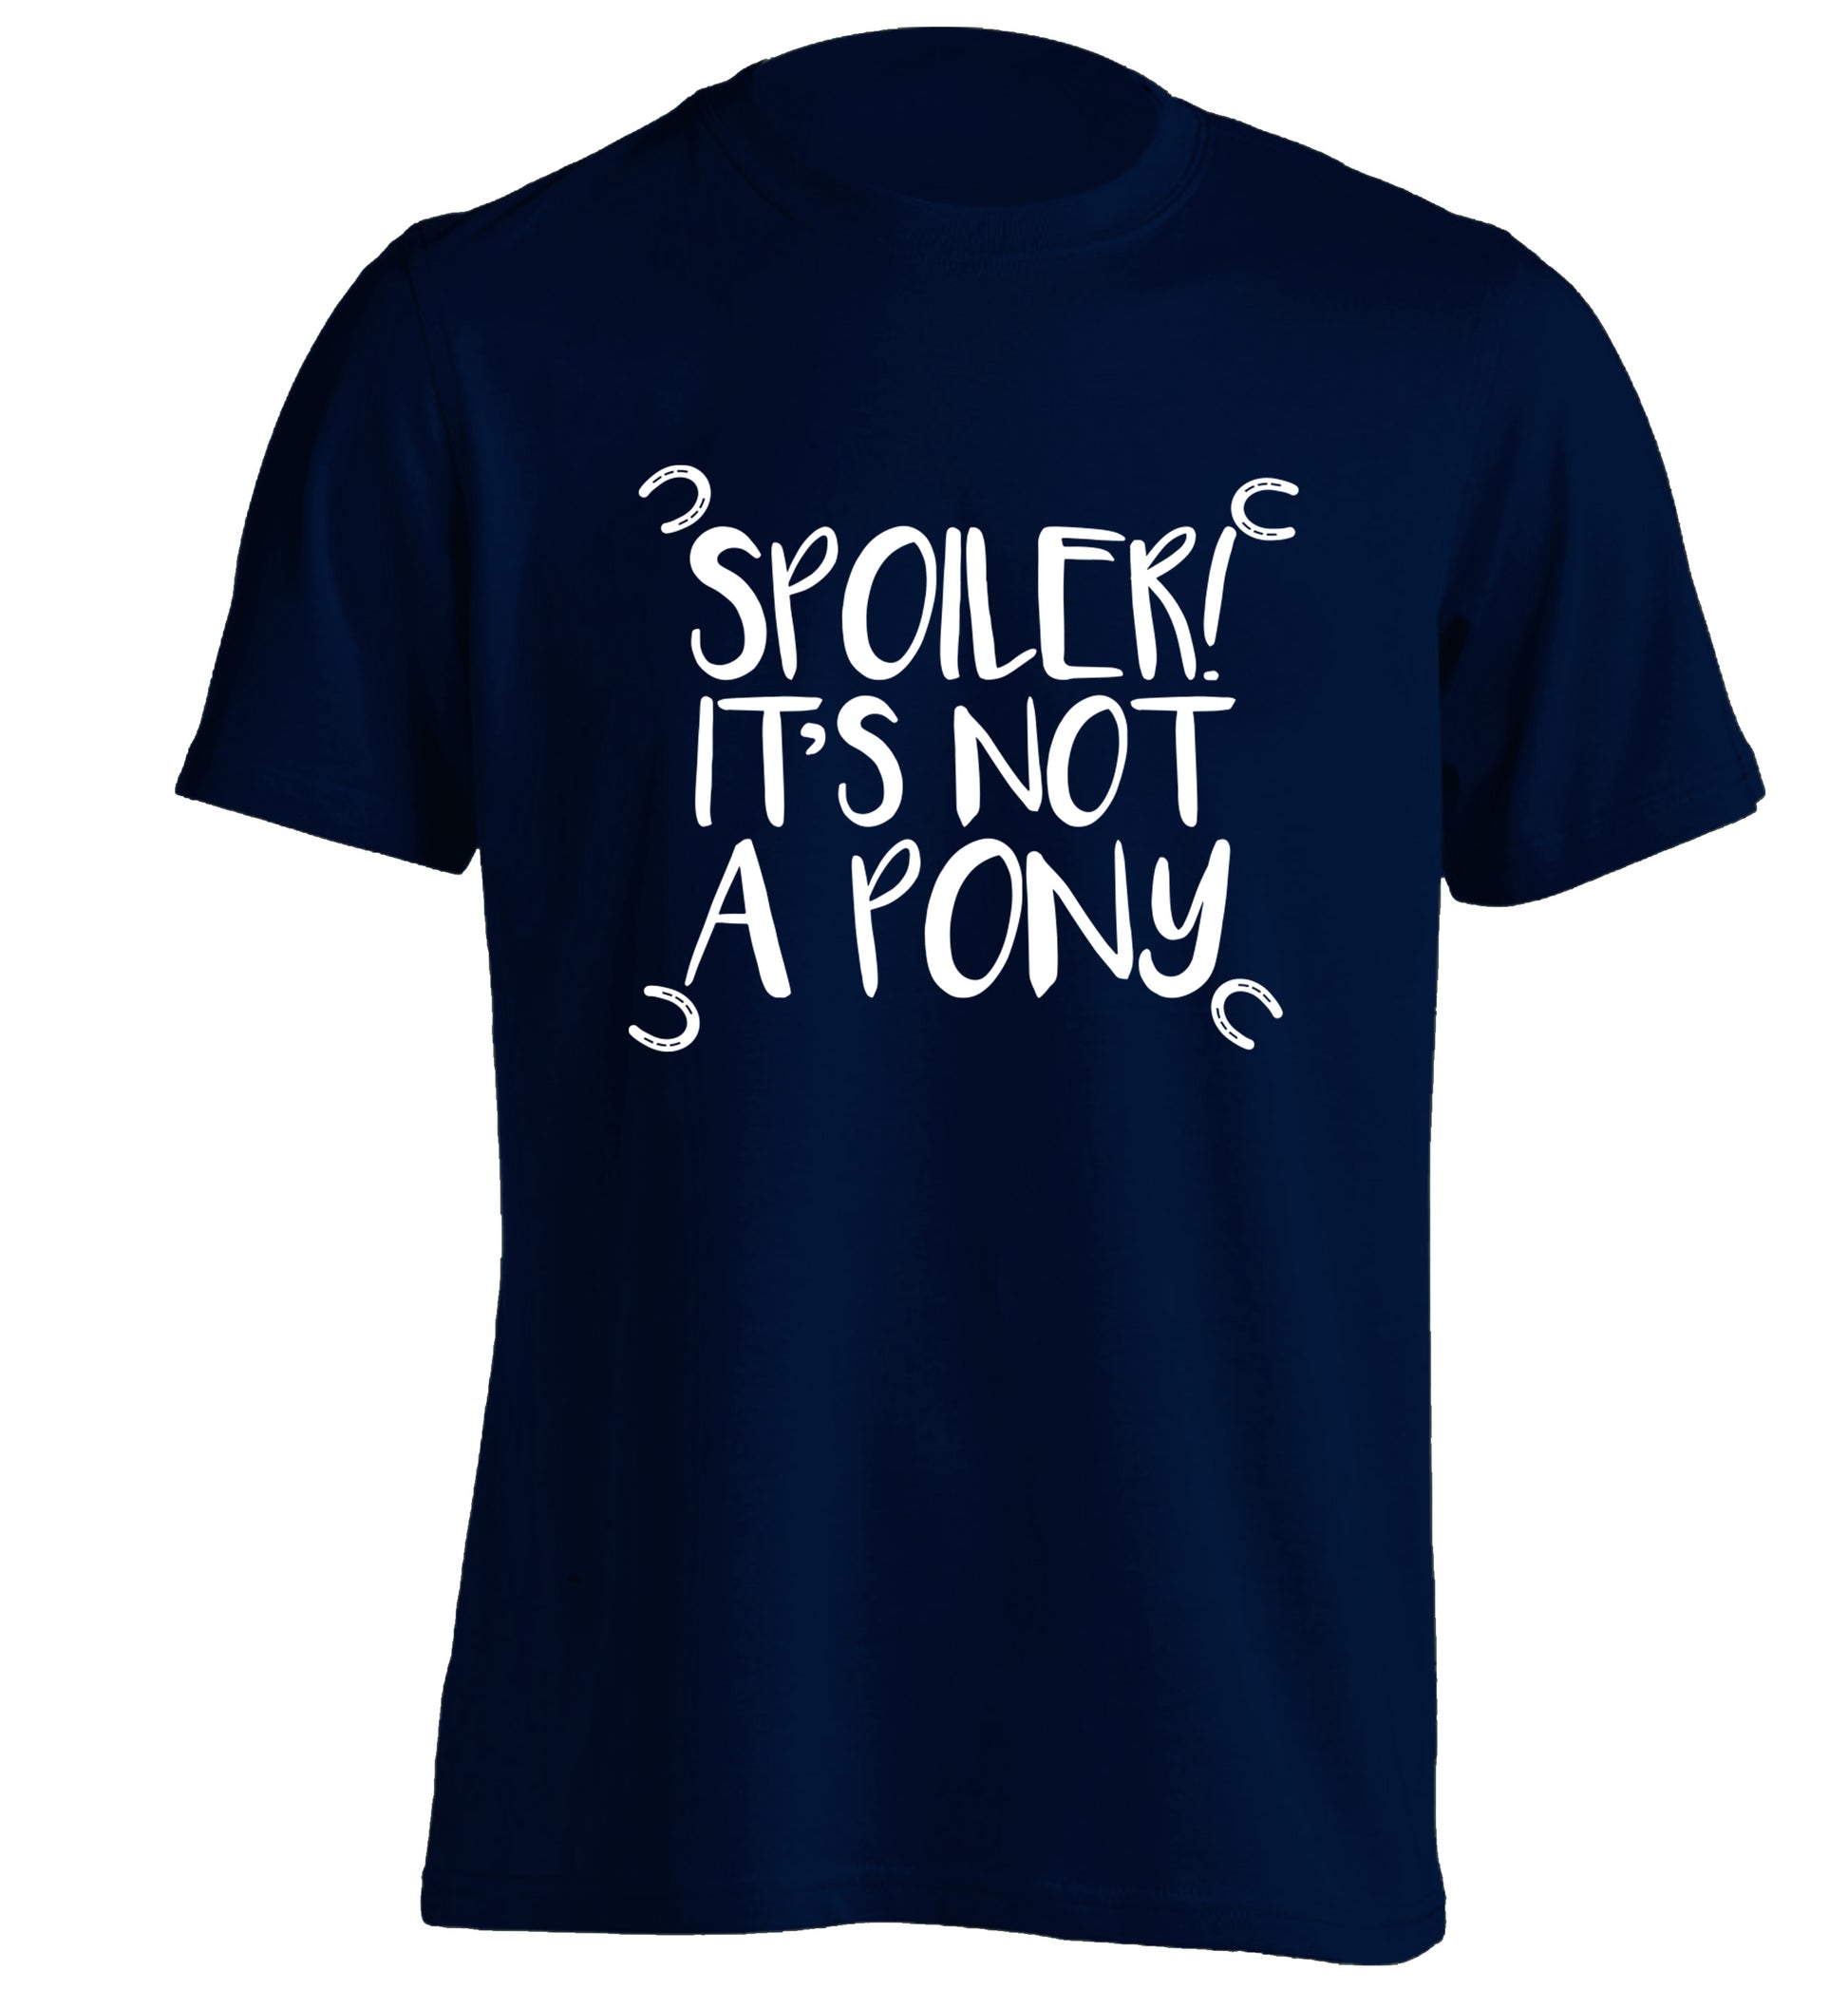 Spoiler it's not a pony adults unisex navy Tshirt 2XL